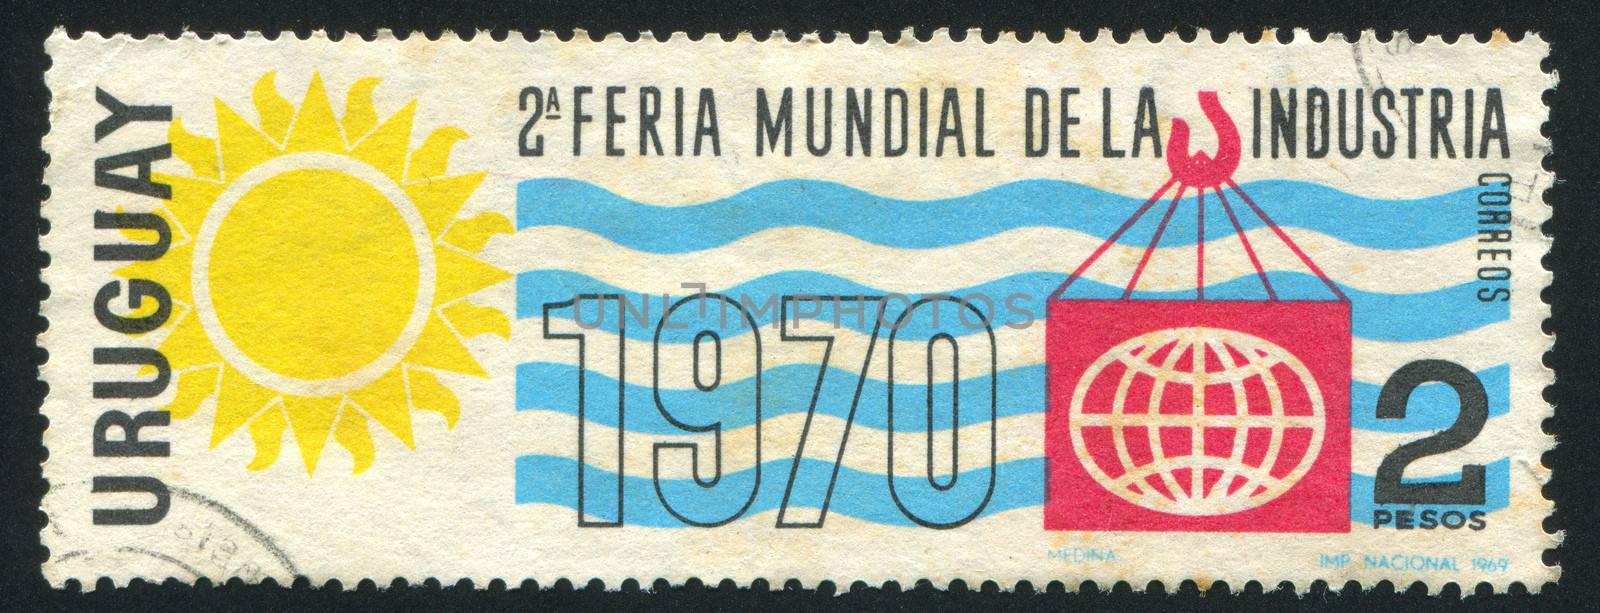 URUGUAY - CIRCA 1969: stamp printed by Uruguay, shows Industrial World Fair Emblem, circa 1969